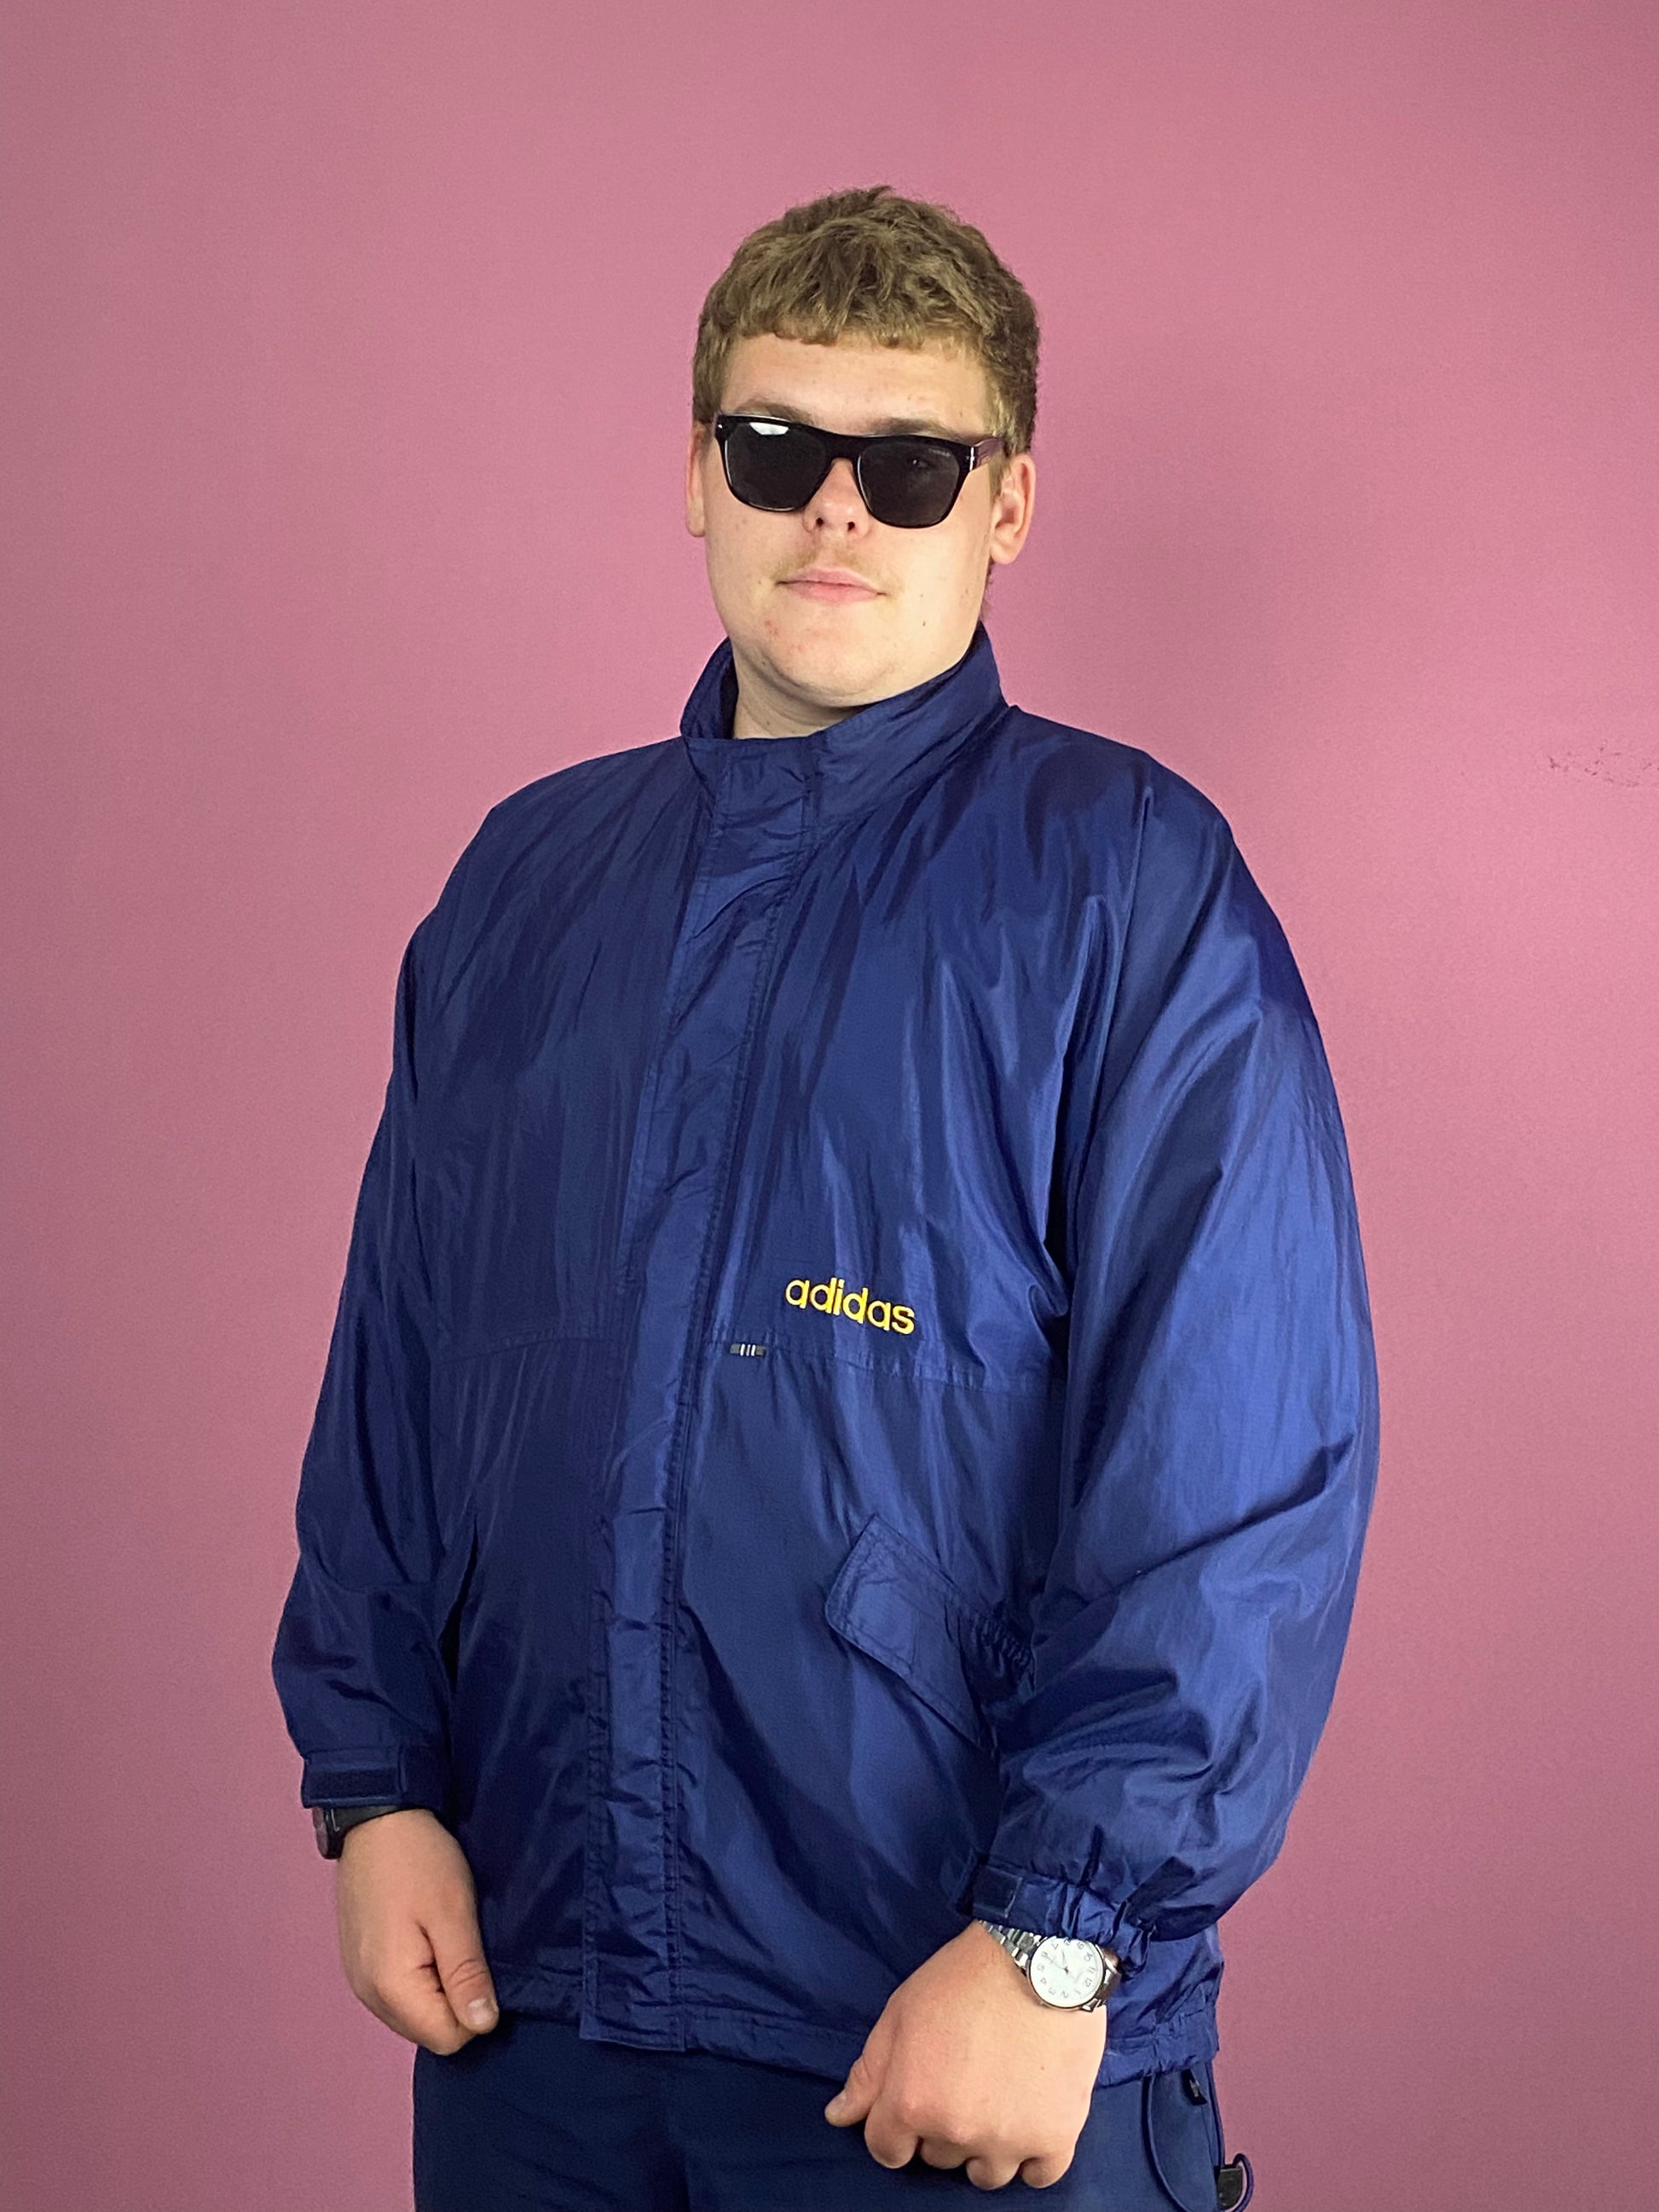 90s Adidas Vintage Men's Windbreaker Jacket - Large Navy Blue Nylon